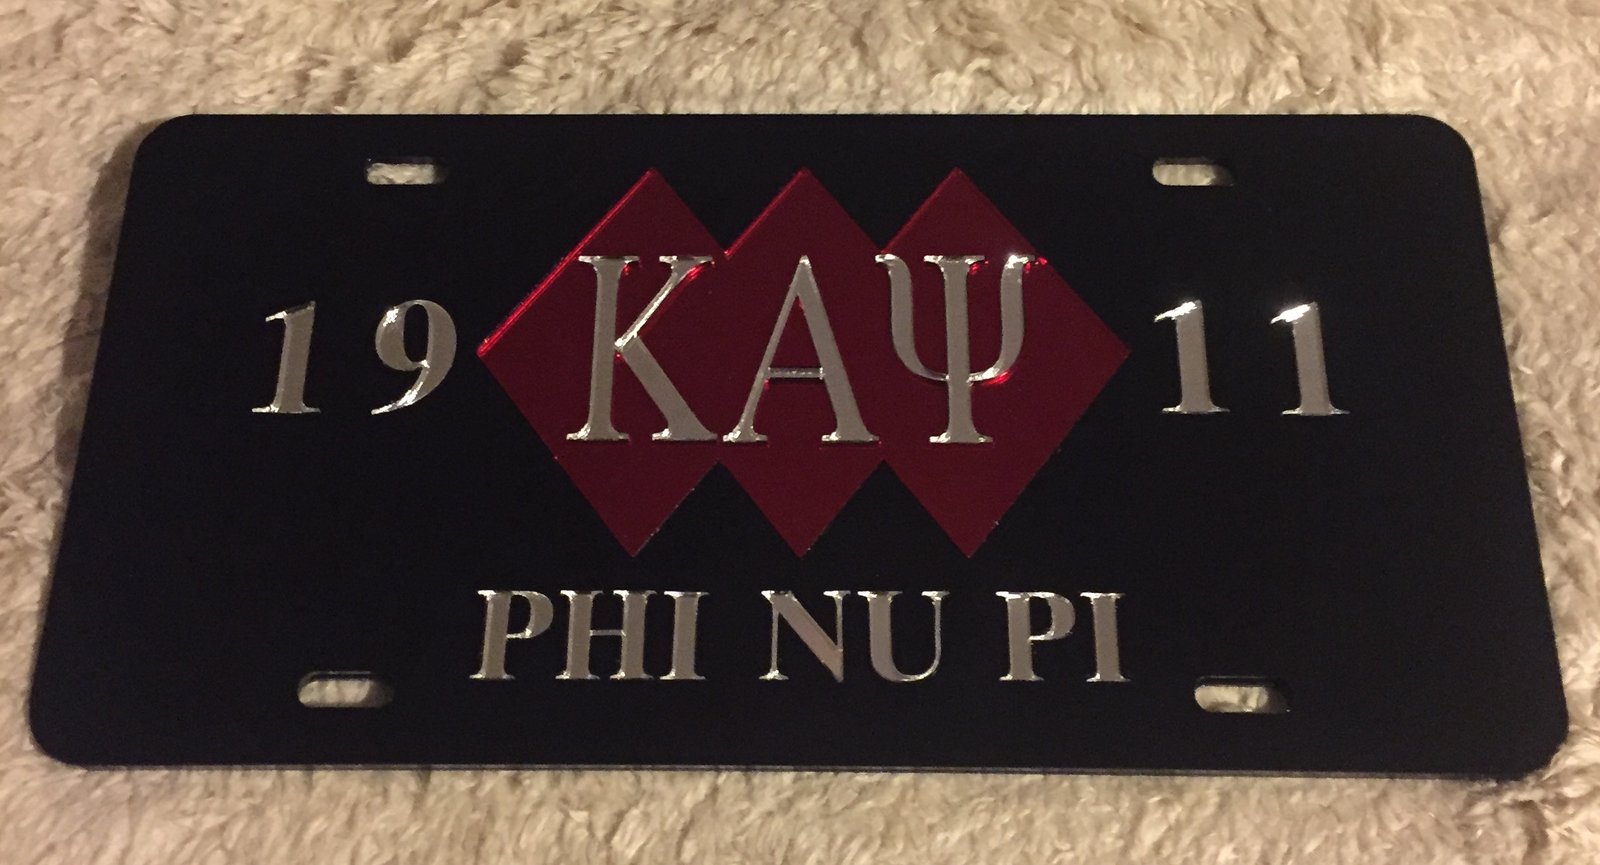 kappa alpha psi license plates